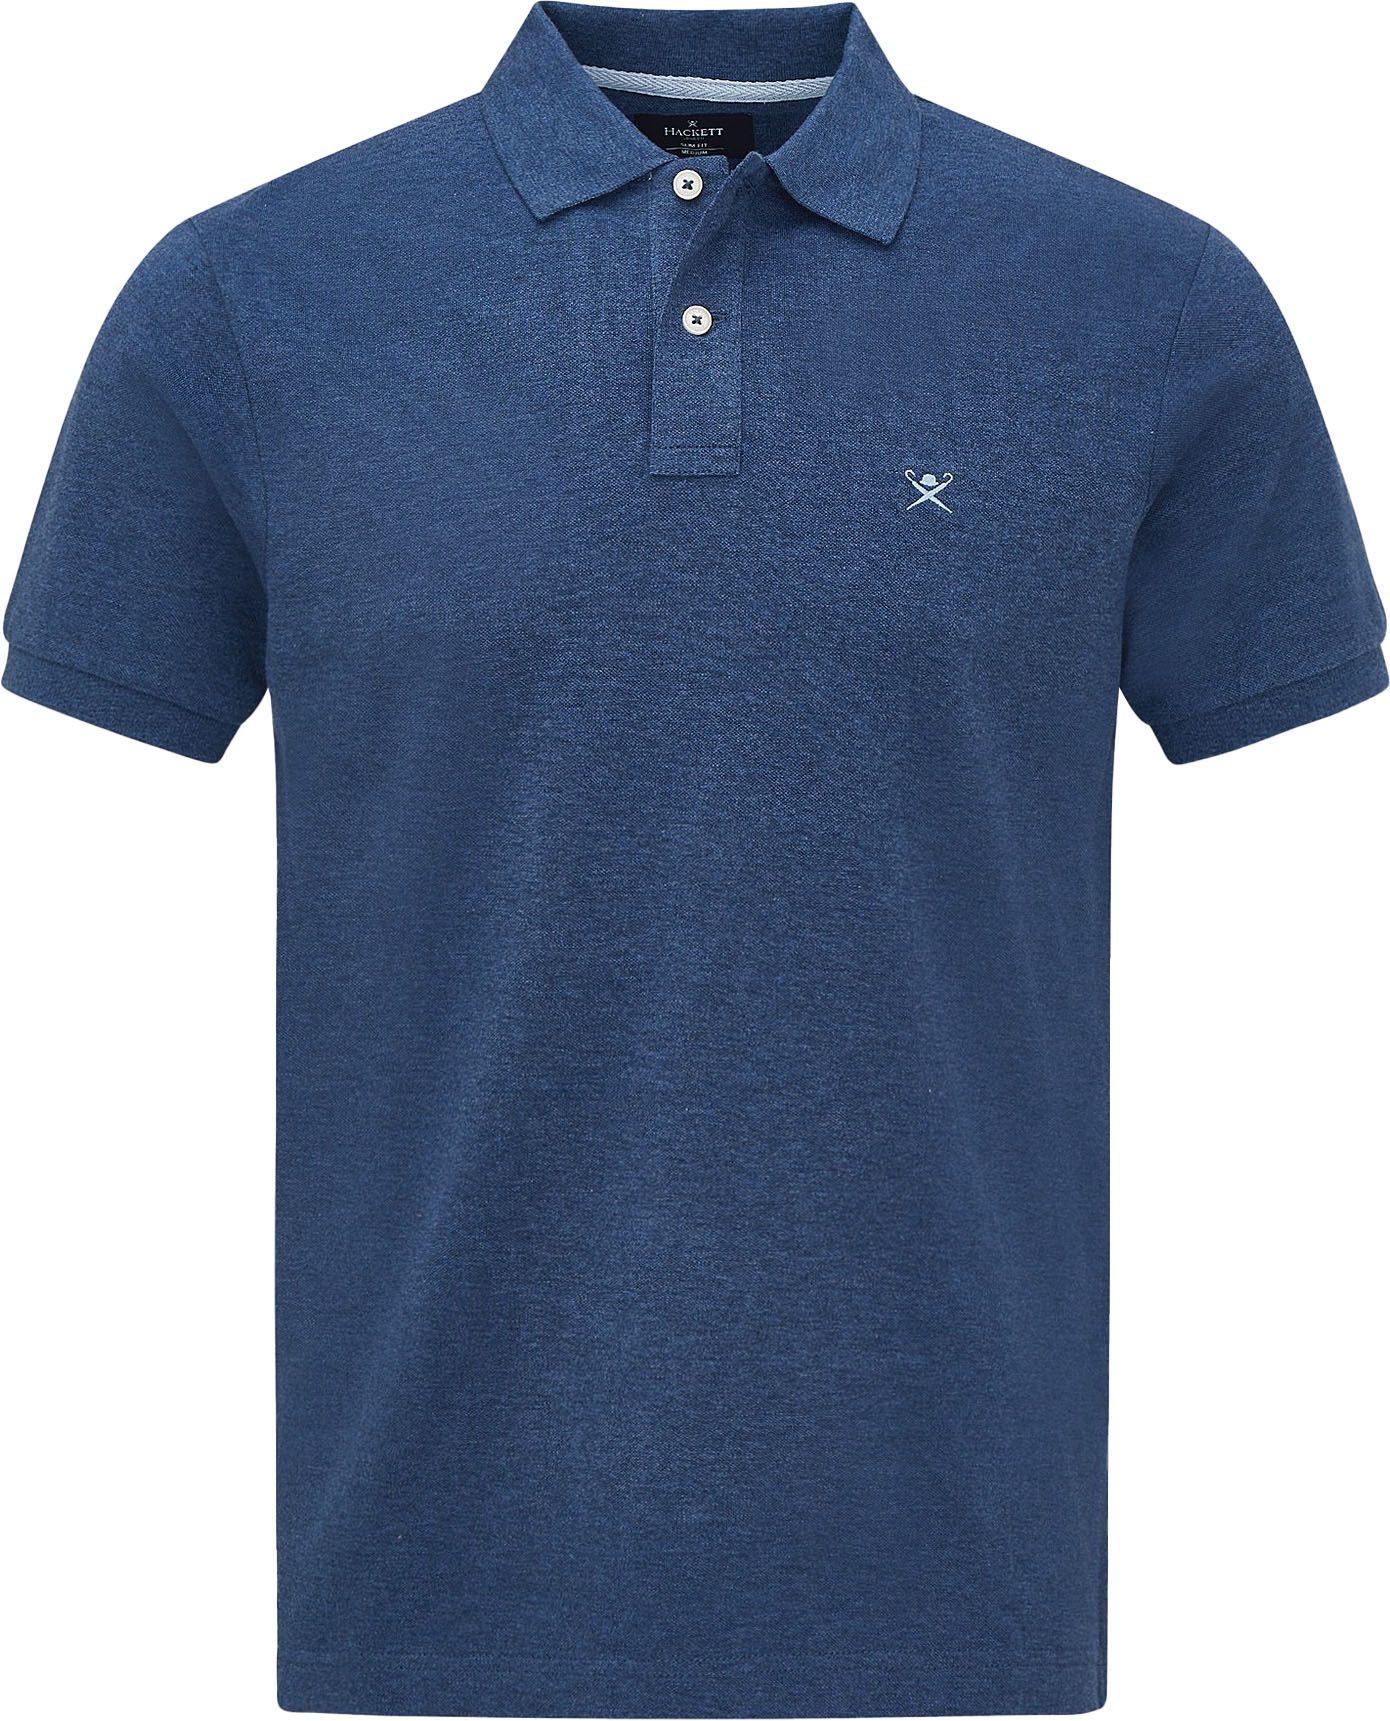 Hackett Polo Shirt Aqua Blue size L